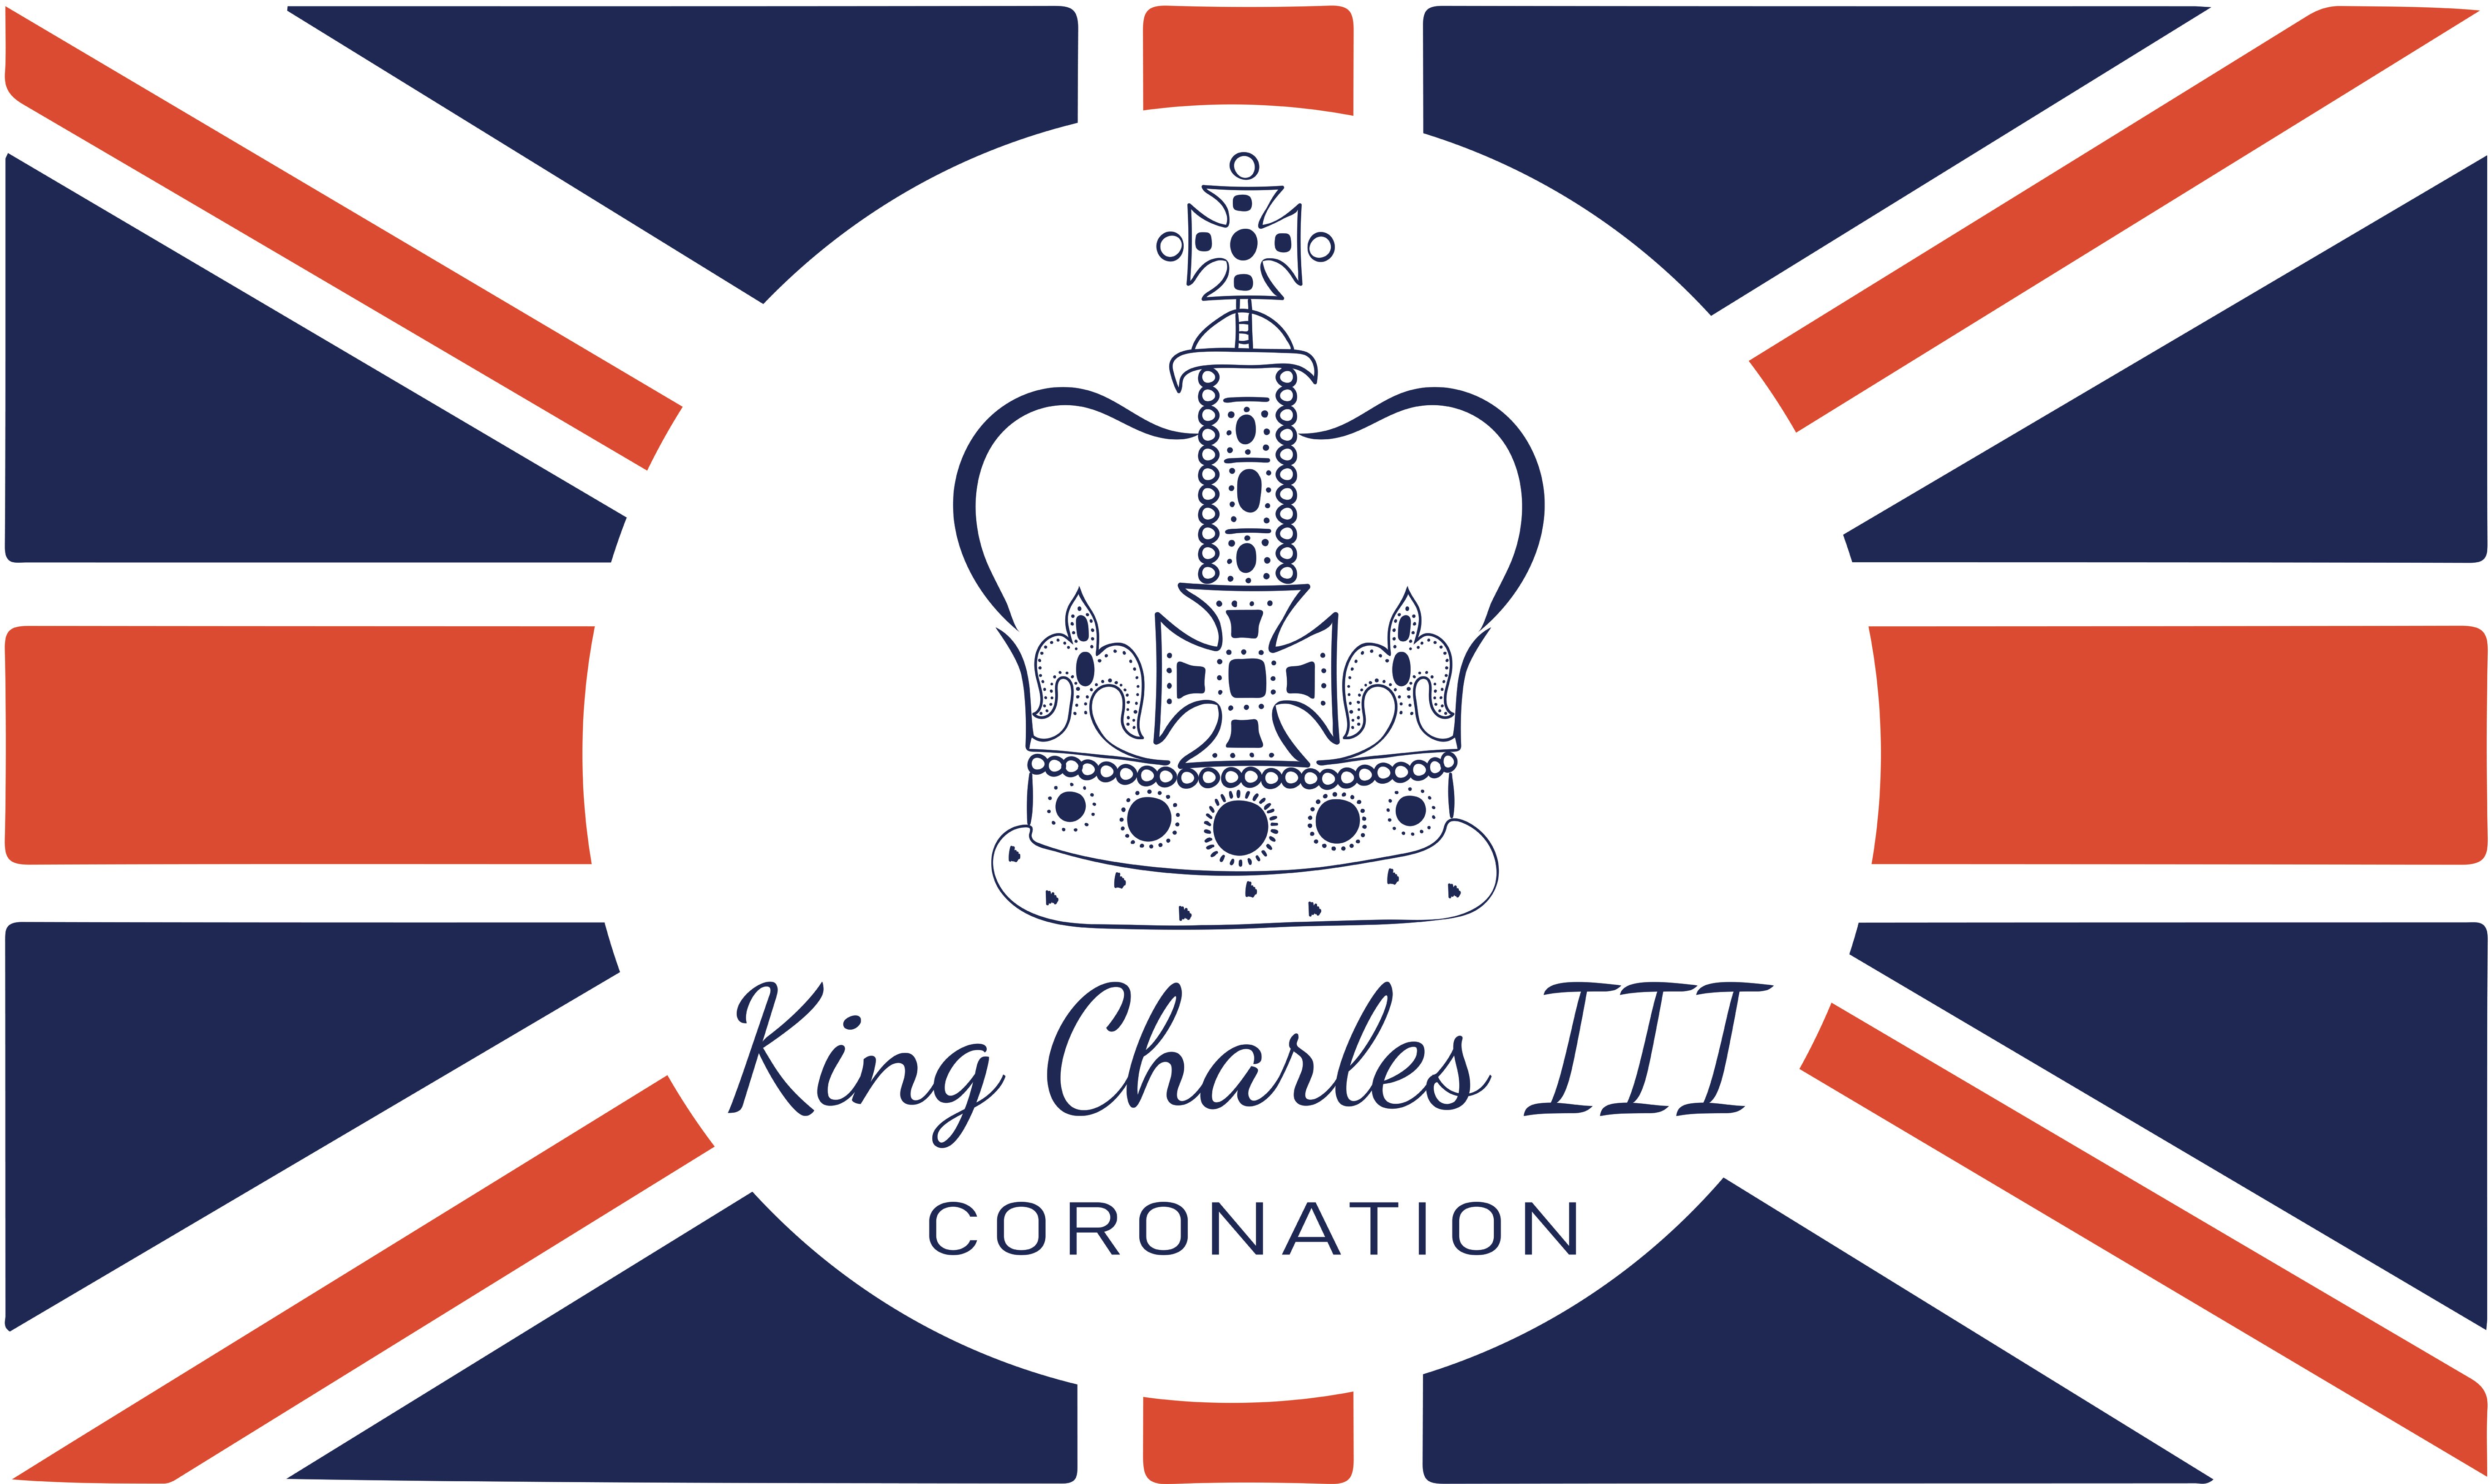 King Charles III coronation blog image